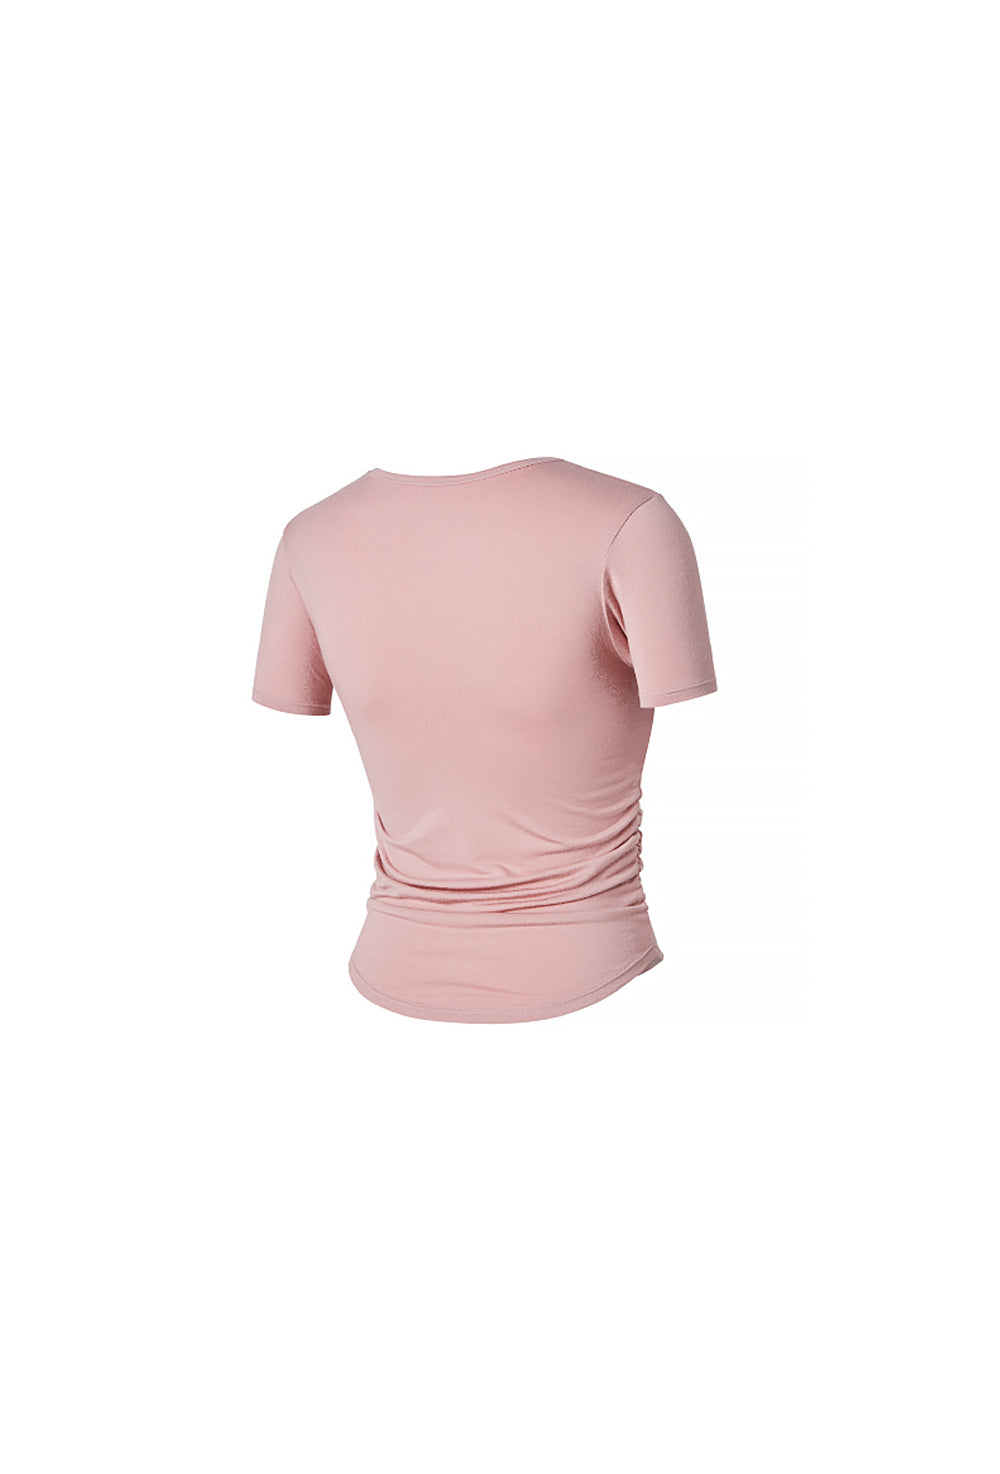 Side Shirring Short Sleeve - Creamy Rose